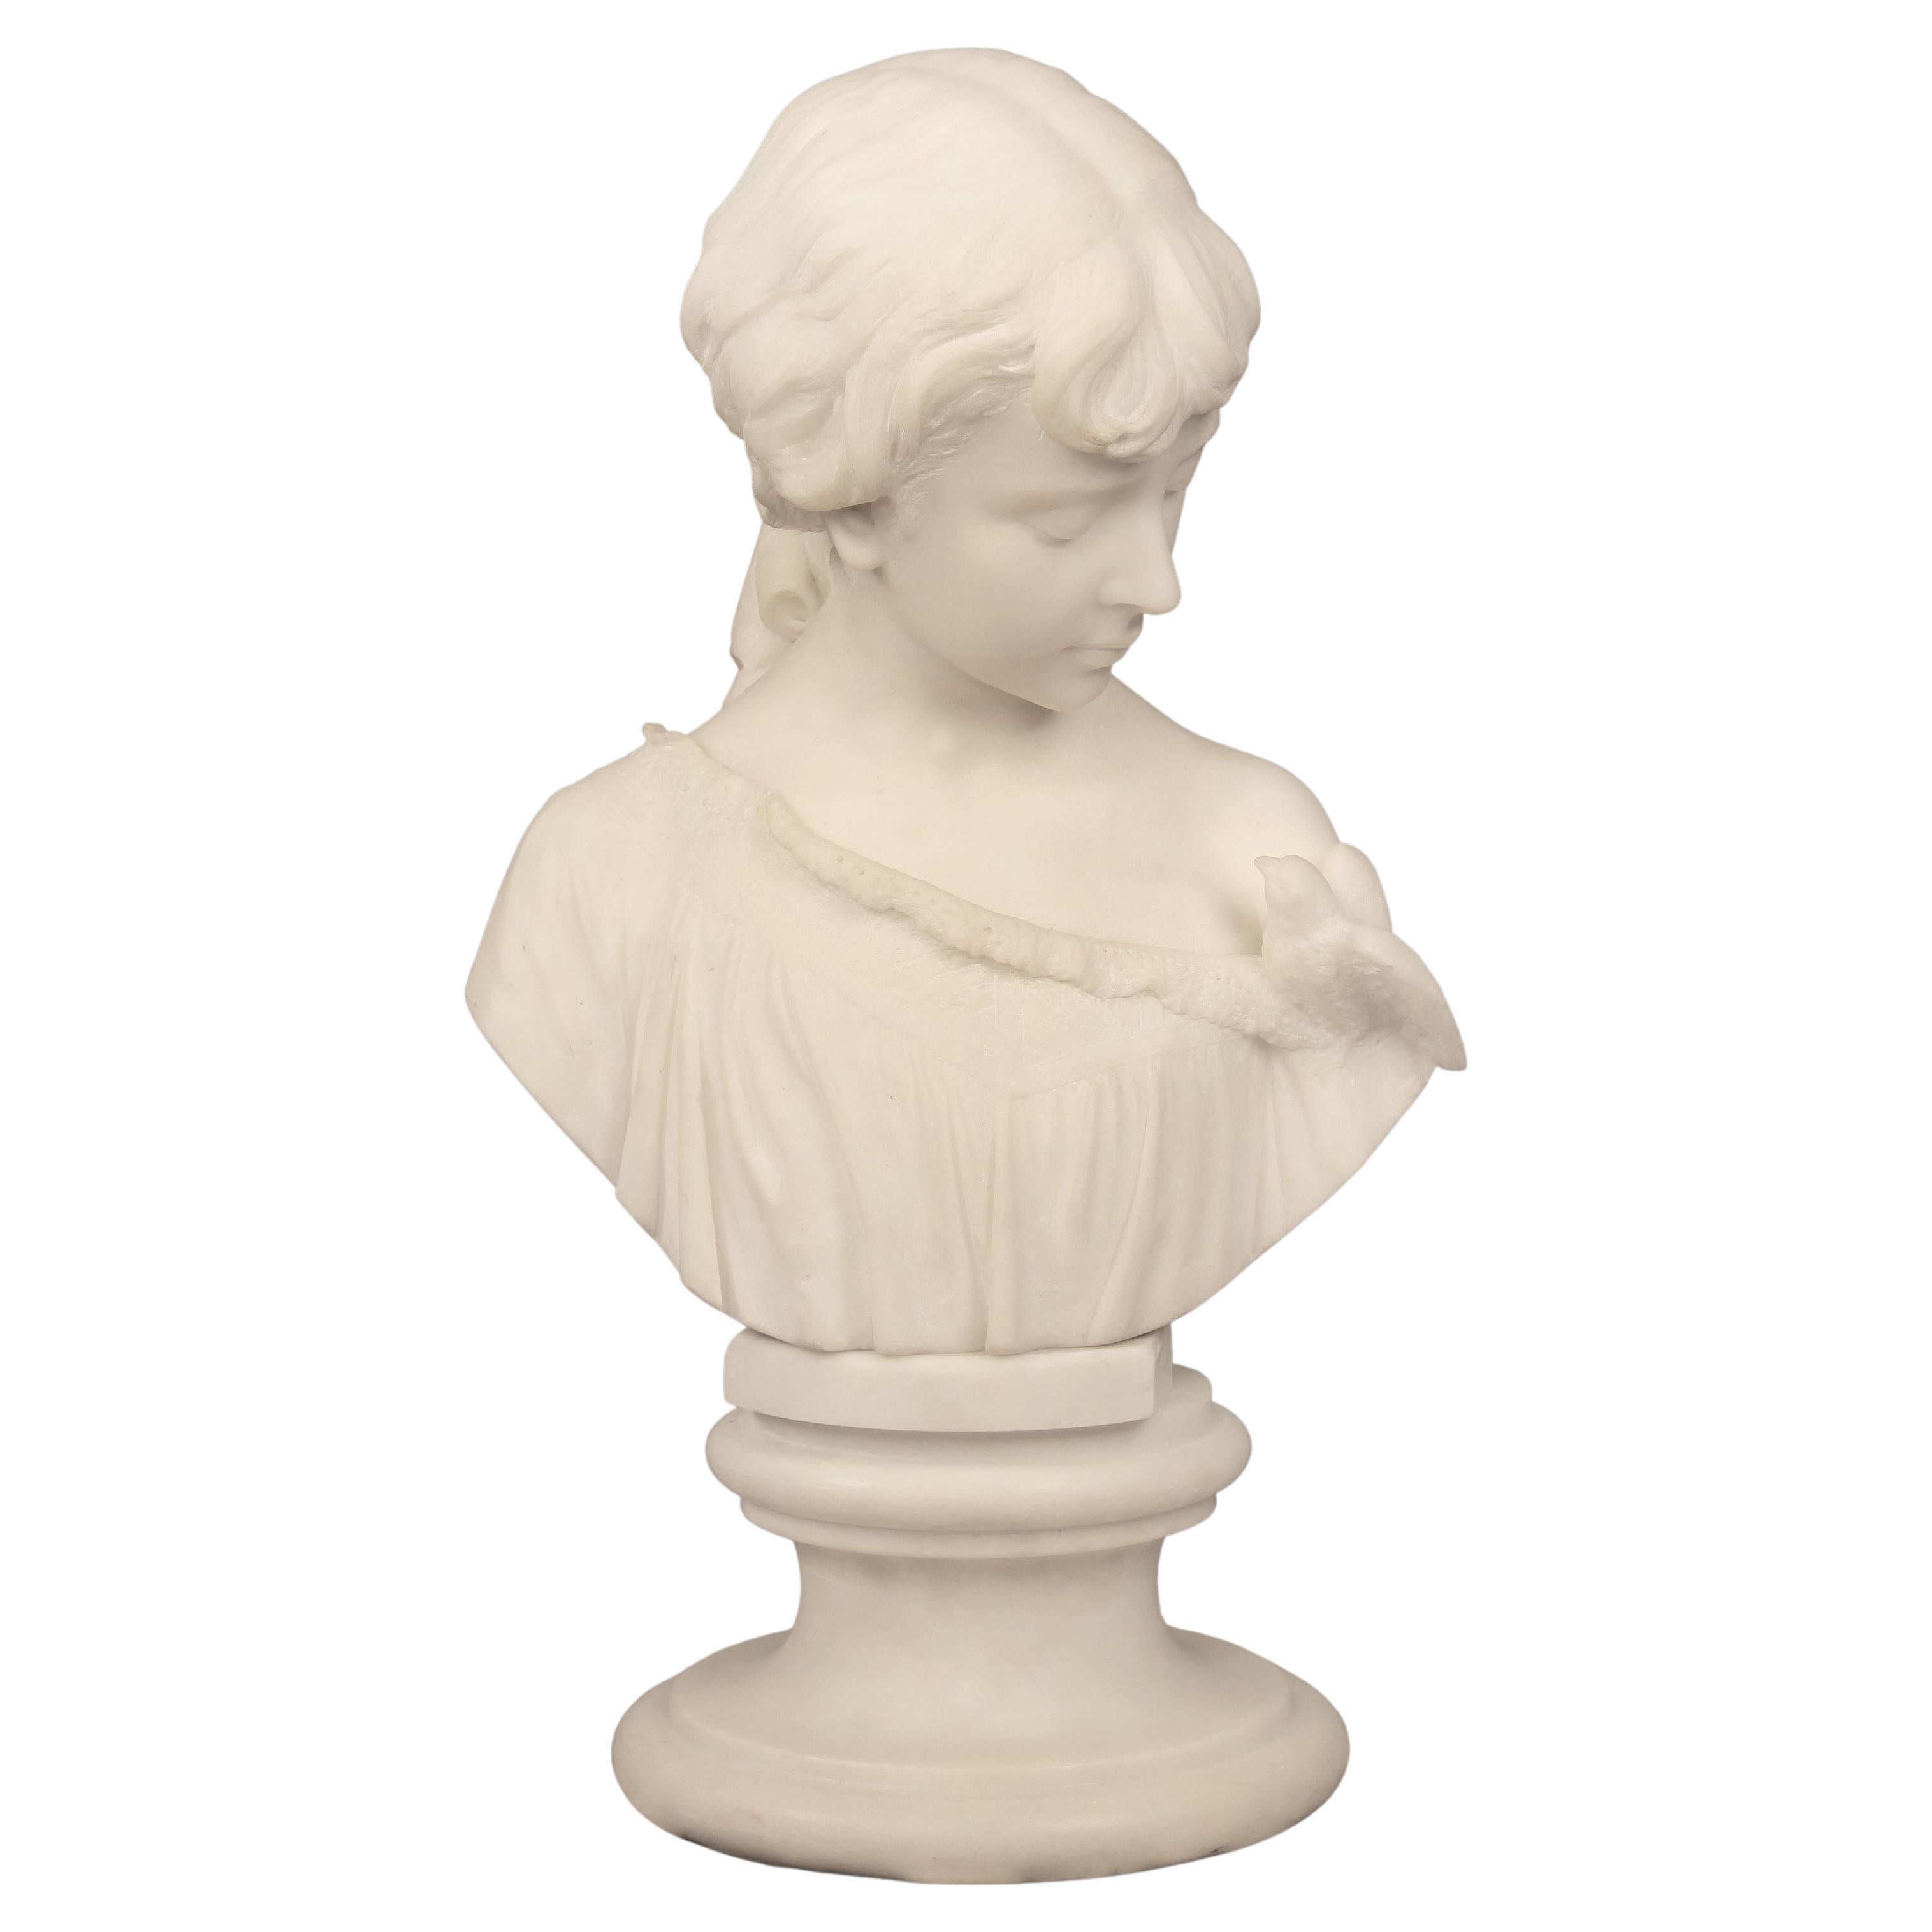 19th Century Italian White Carrara Marble Bust of a Woman - Pietro Bazzanti For Sale